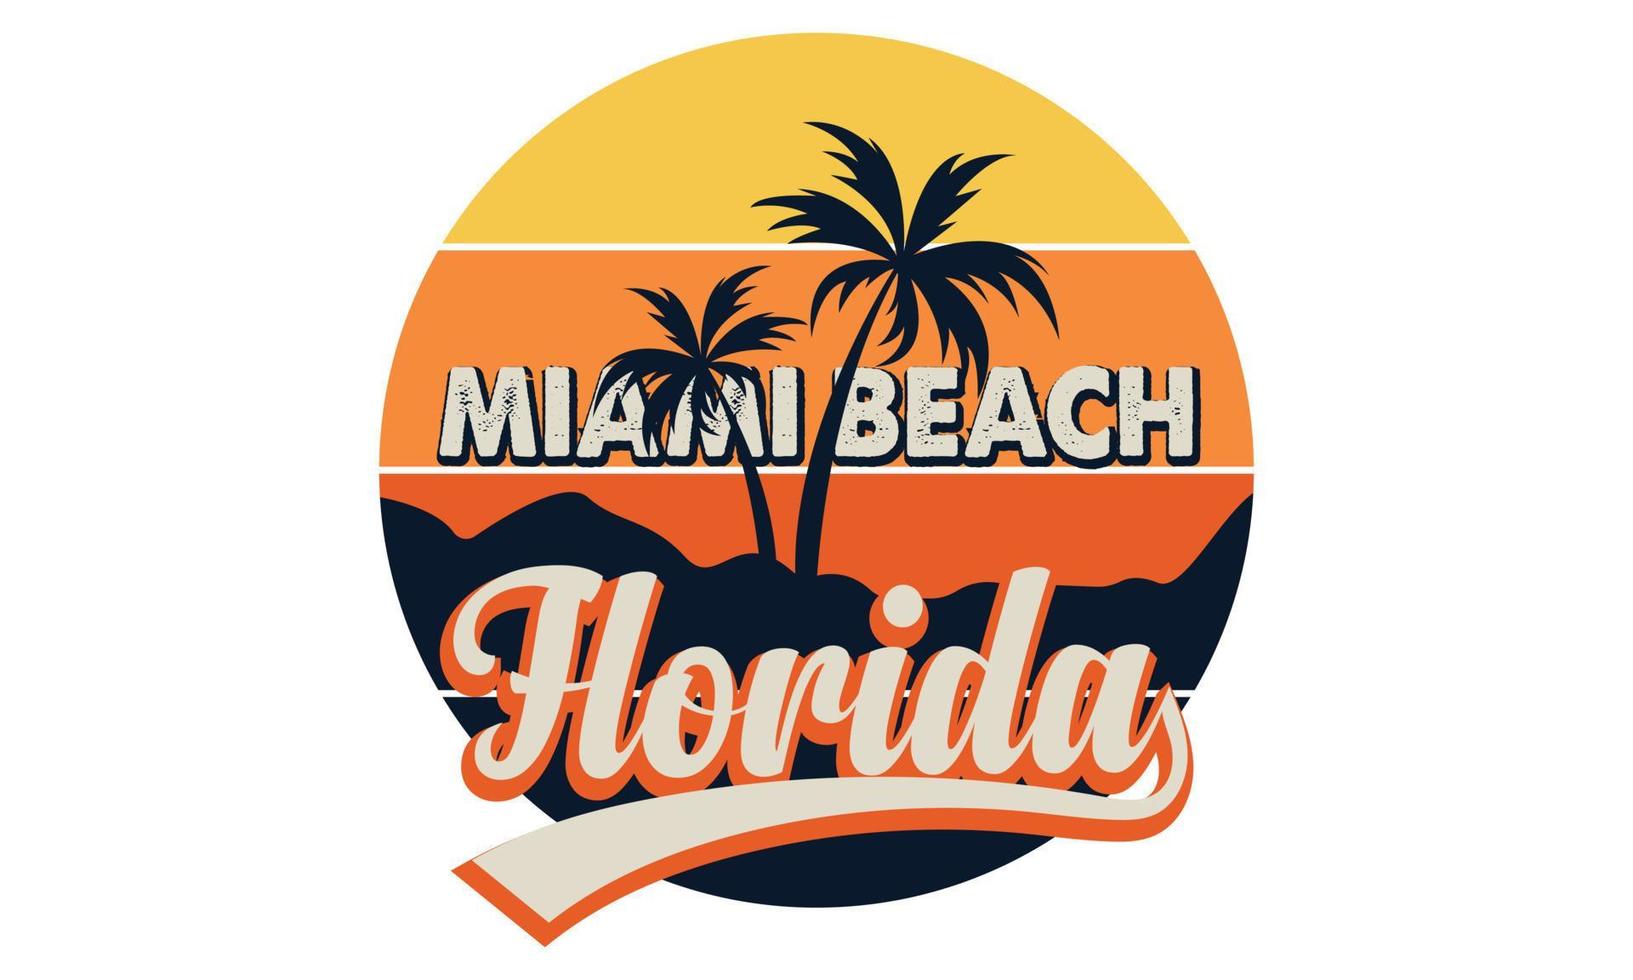 Miami Beach Florida T-shirts Design.  Surfing California Malibu Beach t-shirts. vector